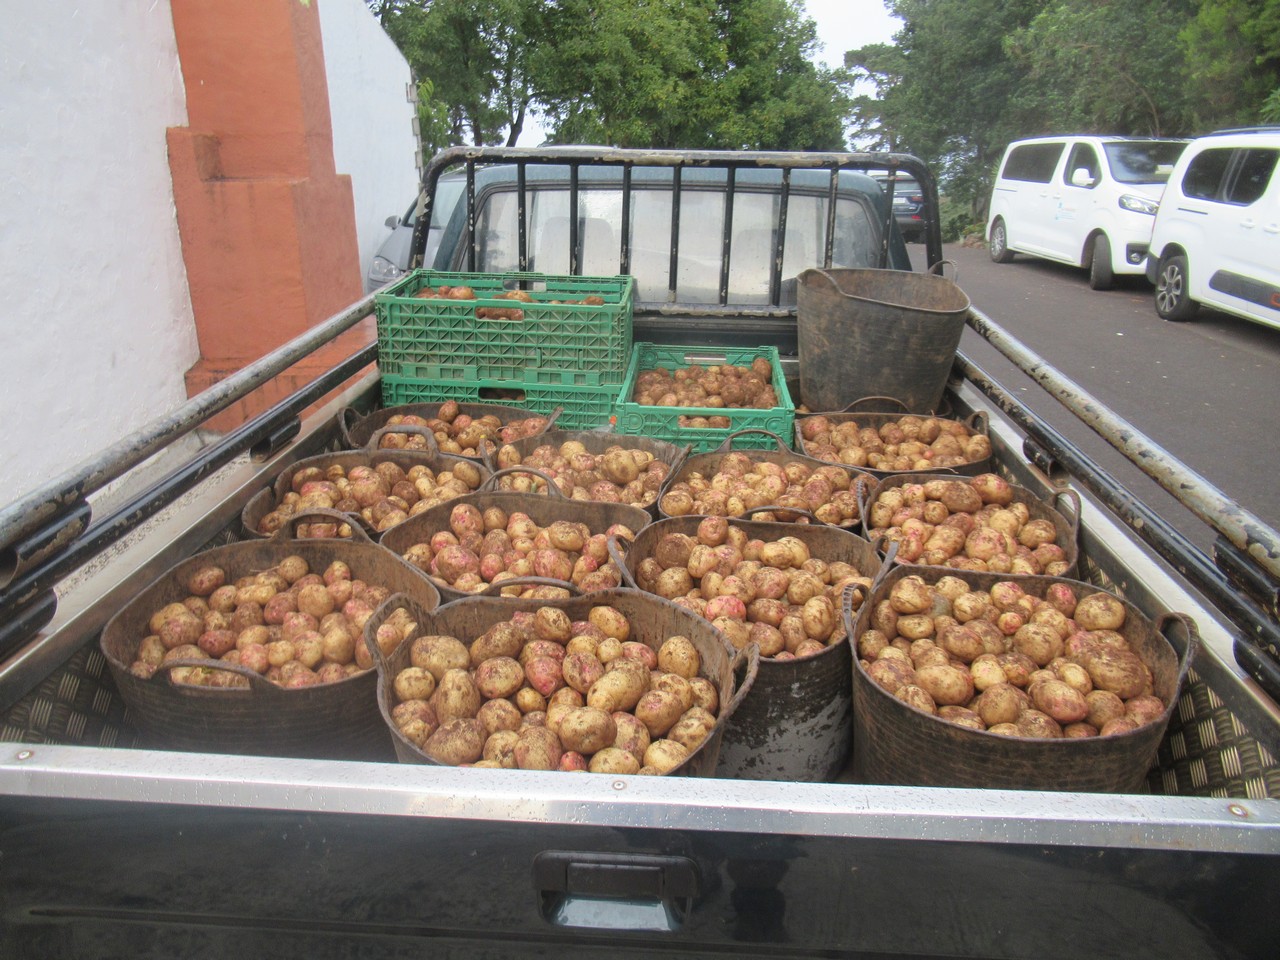 The potato harvest comes.